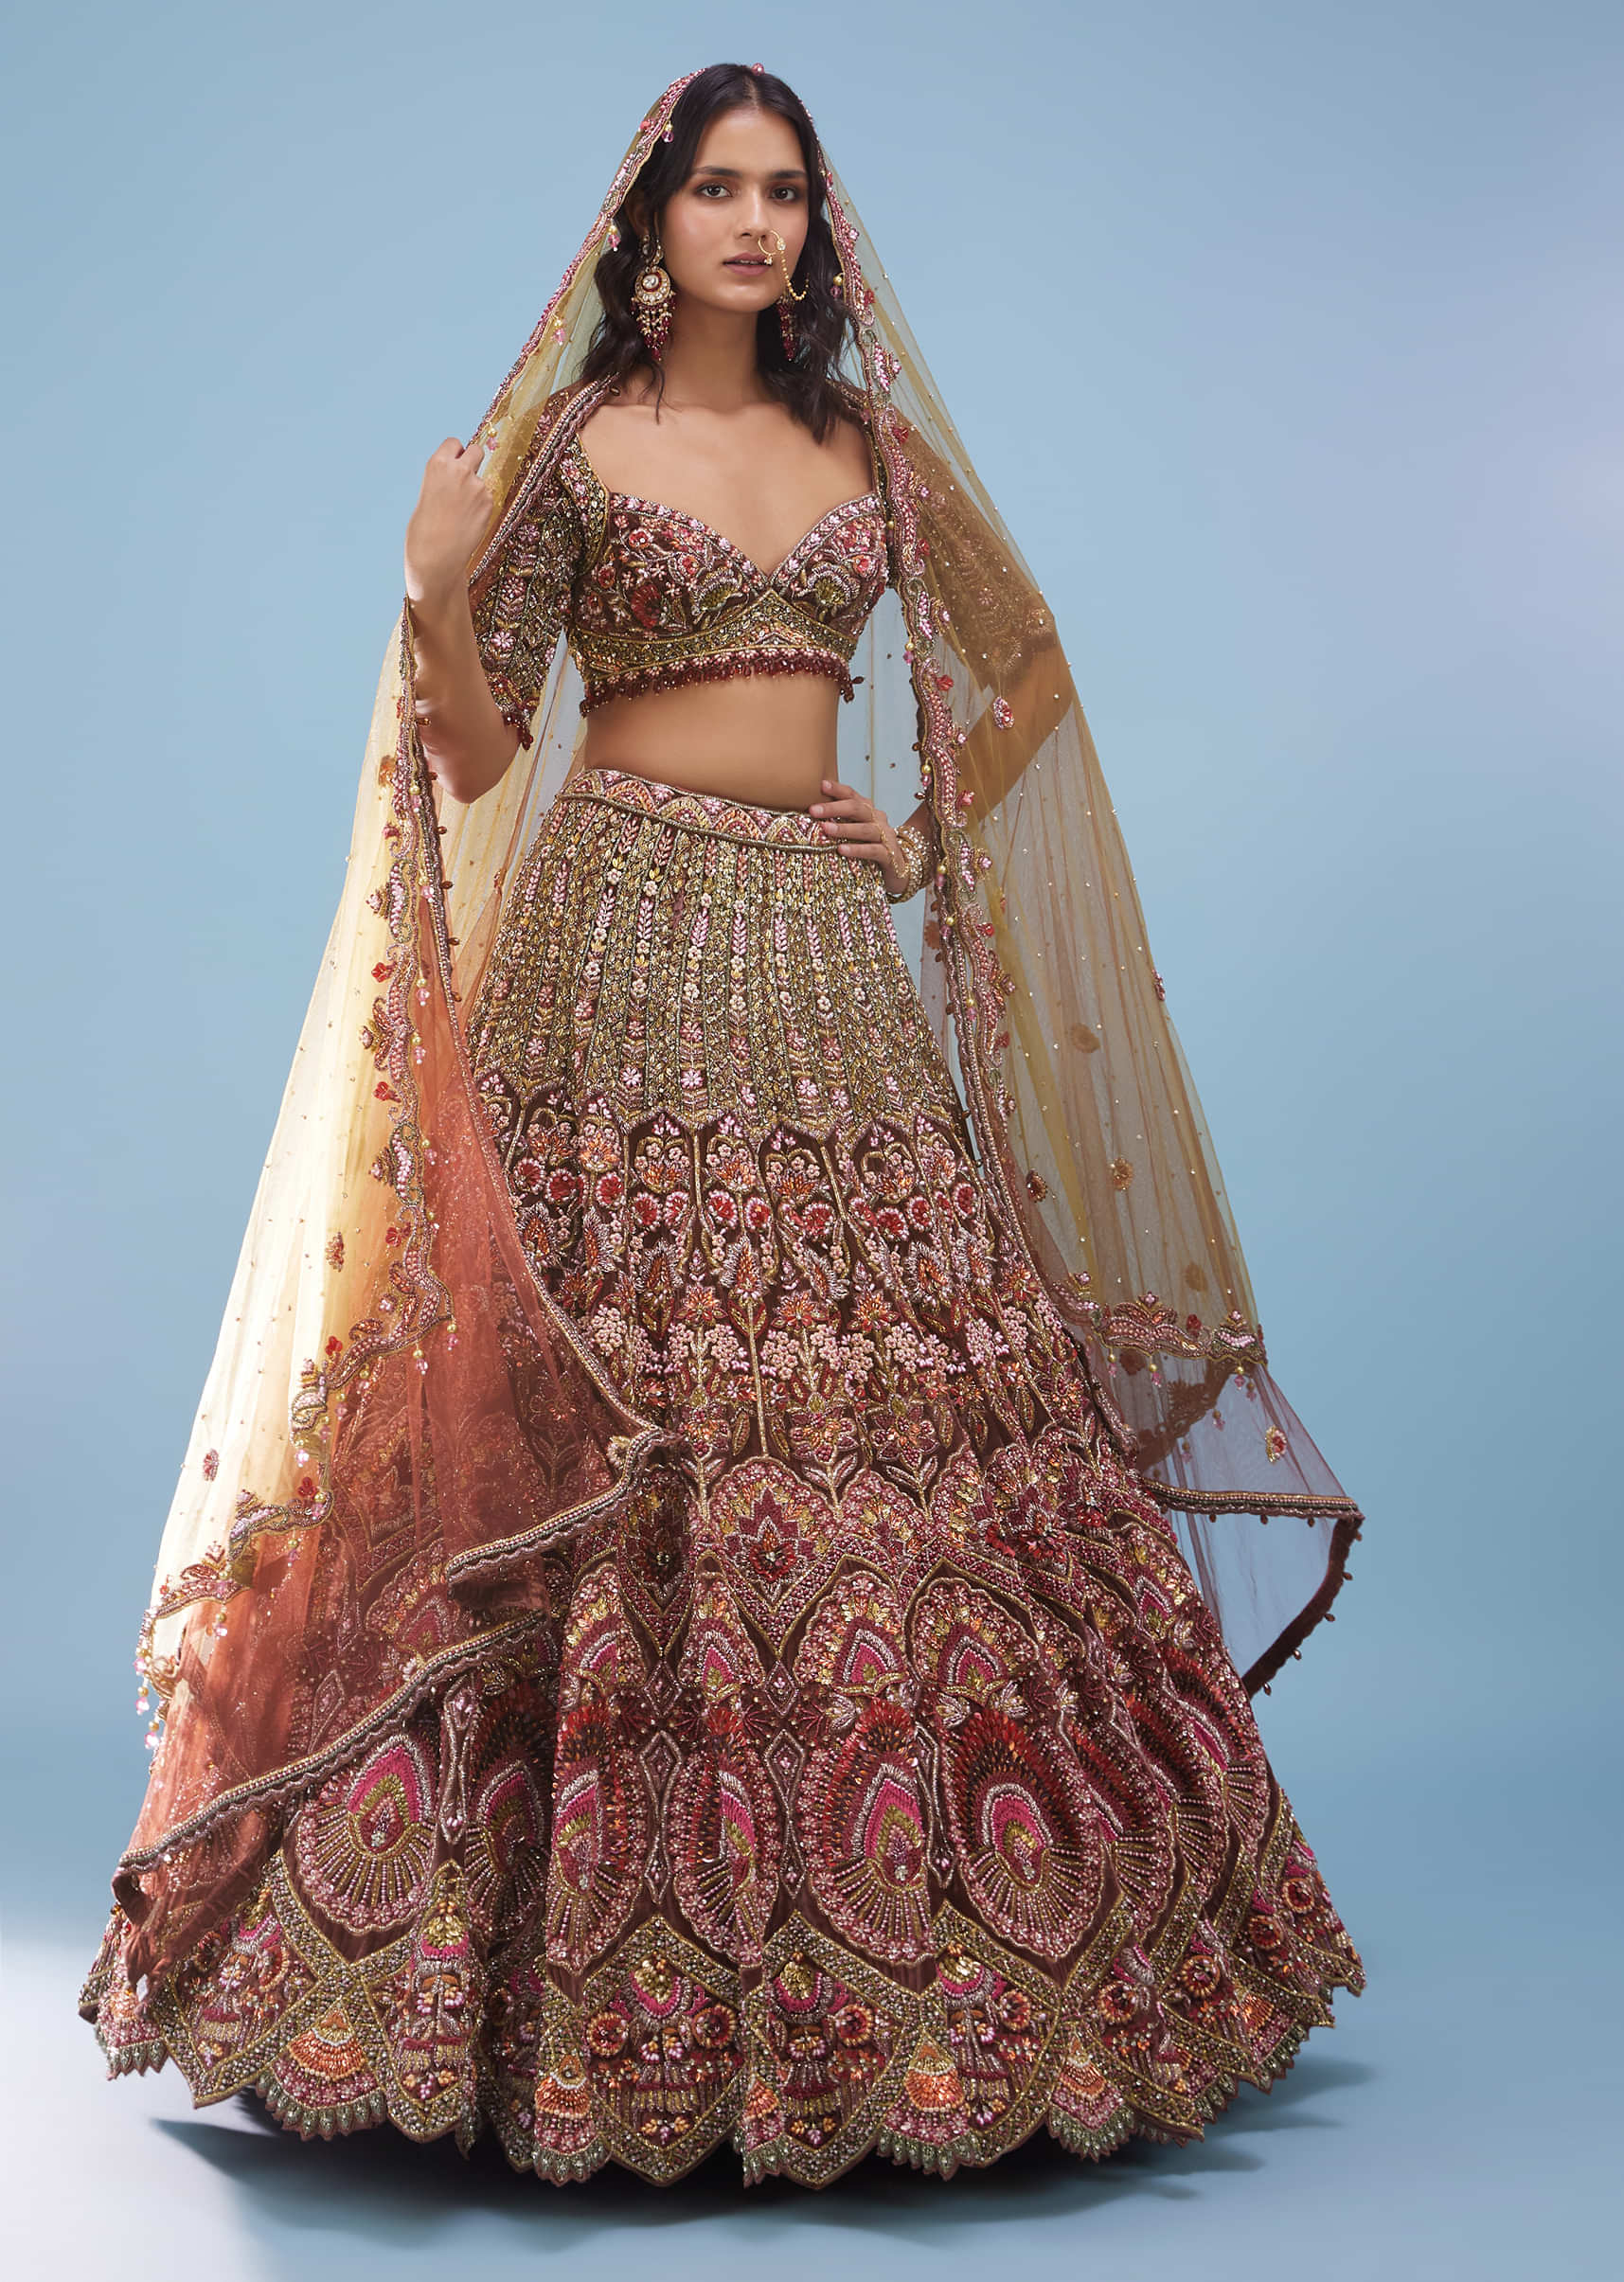 Kalki Wild Ginger Maharani Bridal Lehenga In Velvet With Heavy Floral Embroidery - NOOR 2022